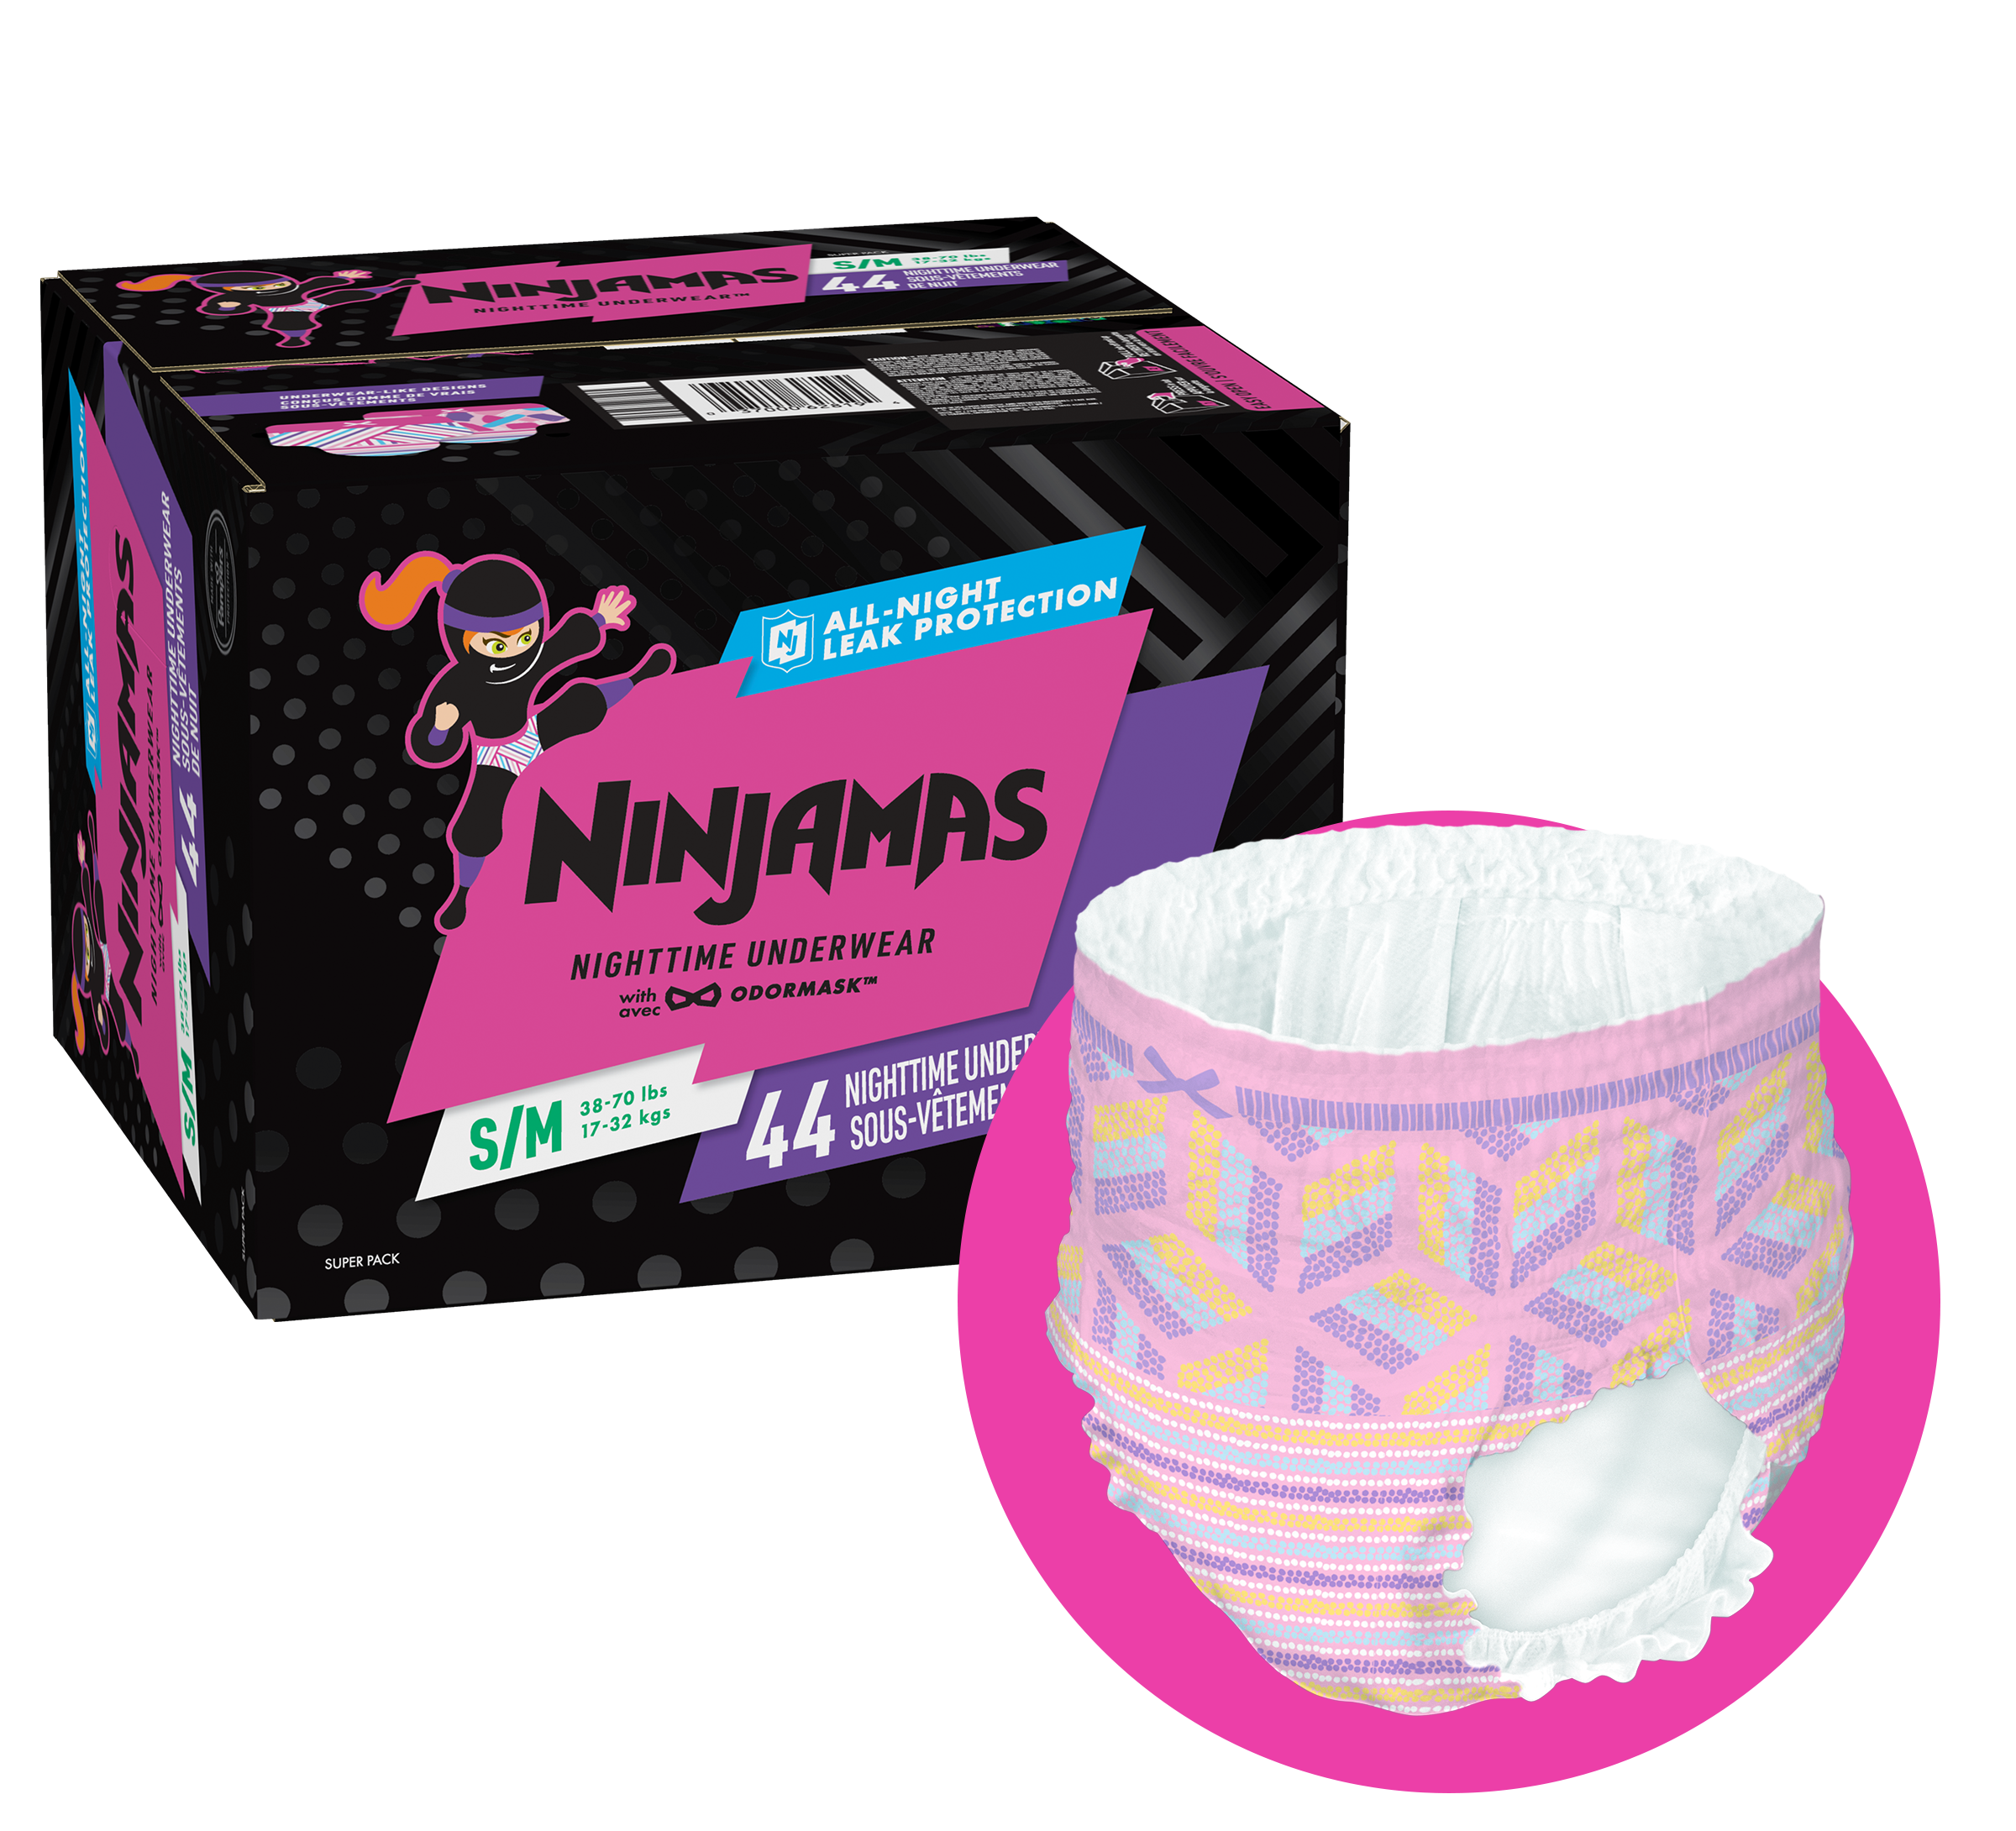 P&G rolls out 'Ninjamas' brand of nighttime underwear under